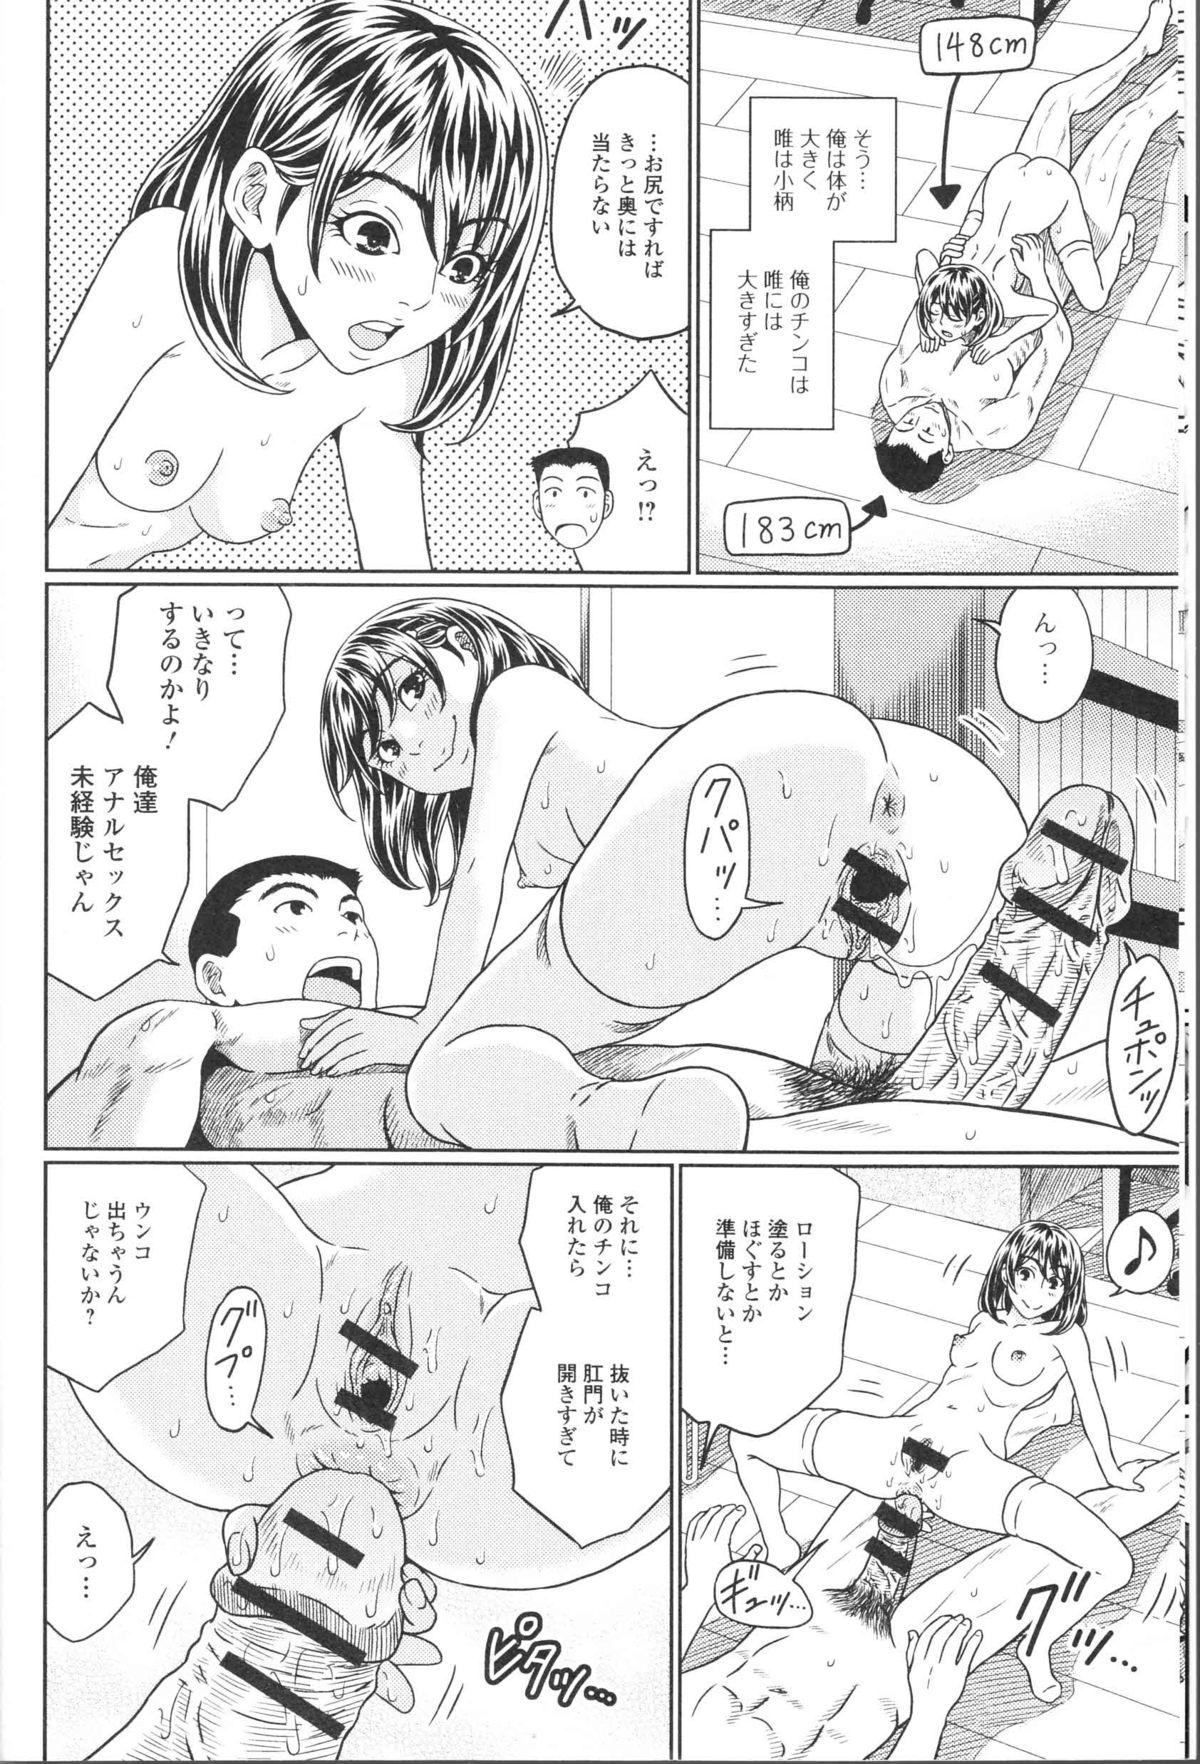 Jap Nozoite wa Ikenai NEO! II - Do Not Peep NEO! II Clothed - Page 8